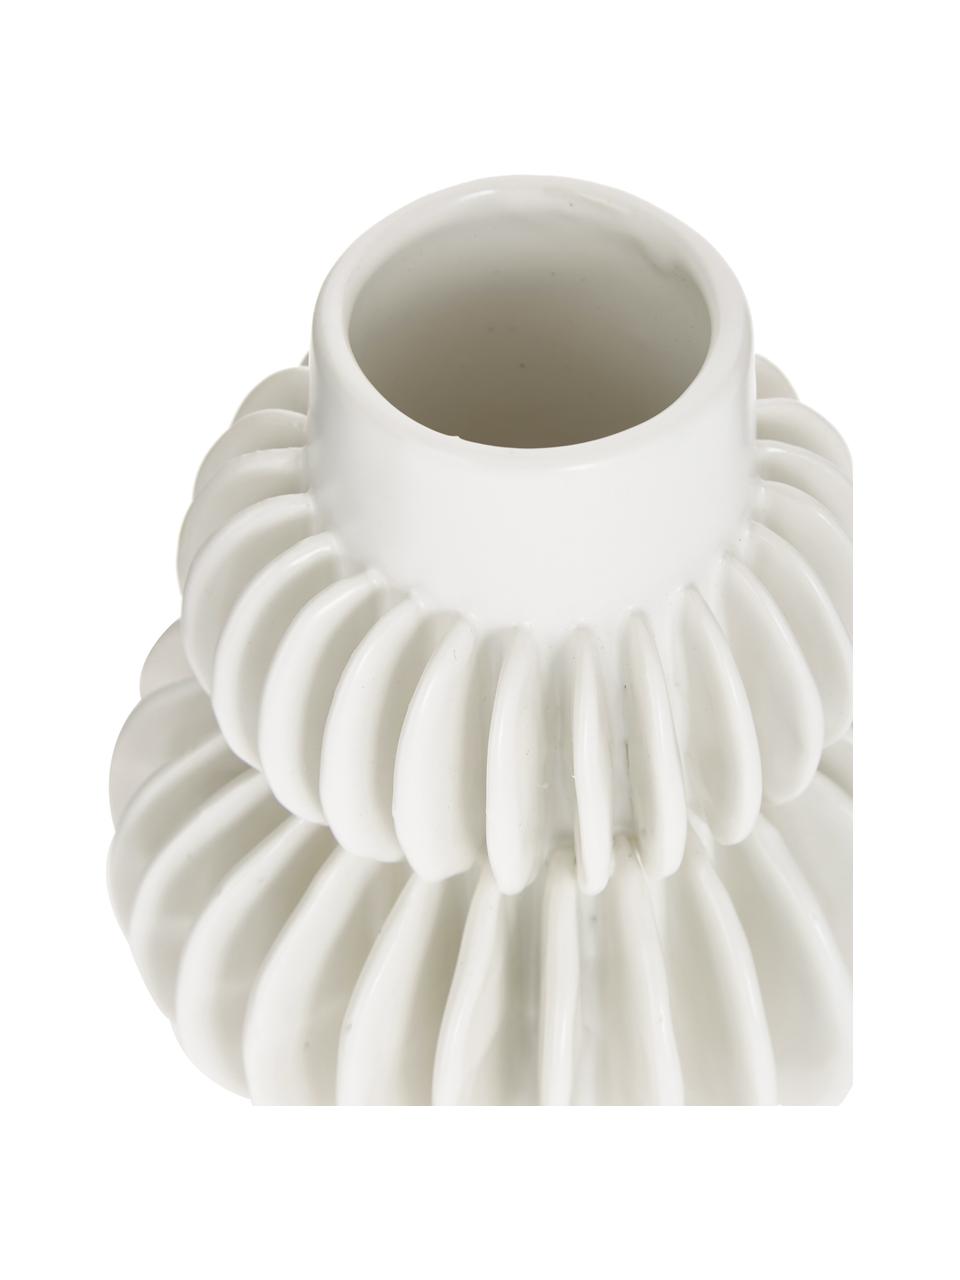 Petit vase design en grès blanc Bela, Grès cérame, Blanc, Ø 12 x haut. 14 cm